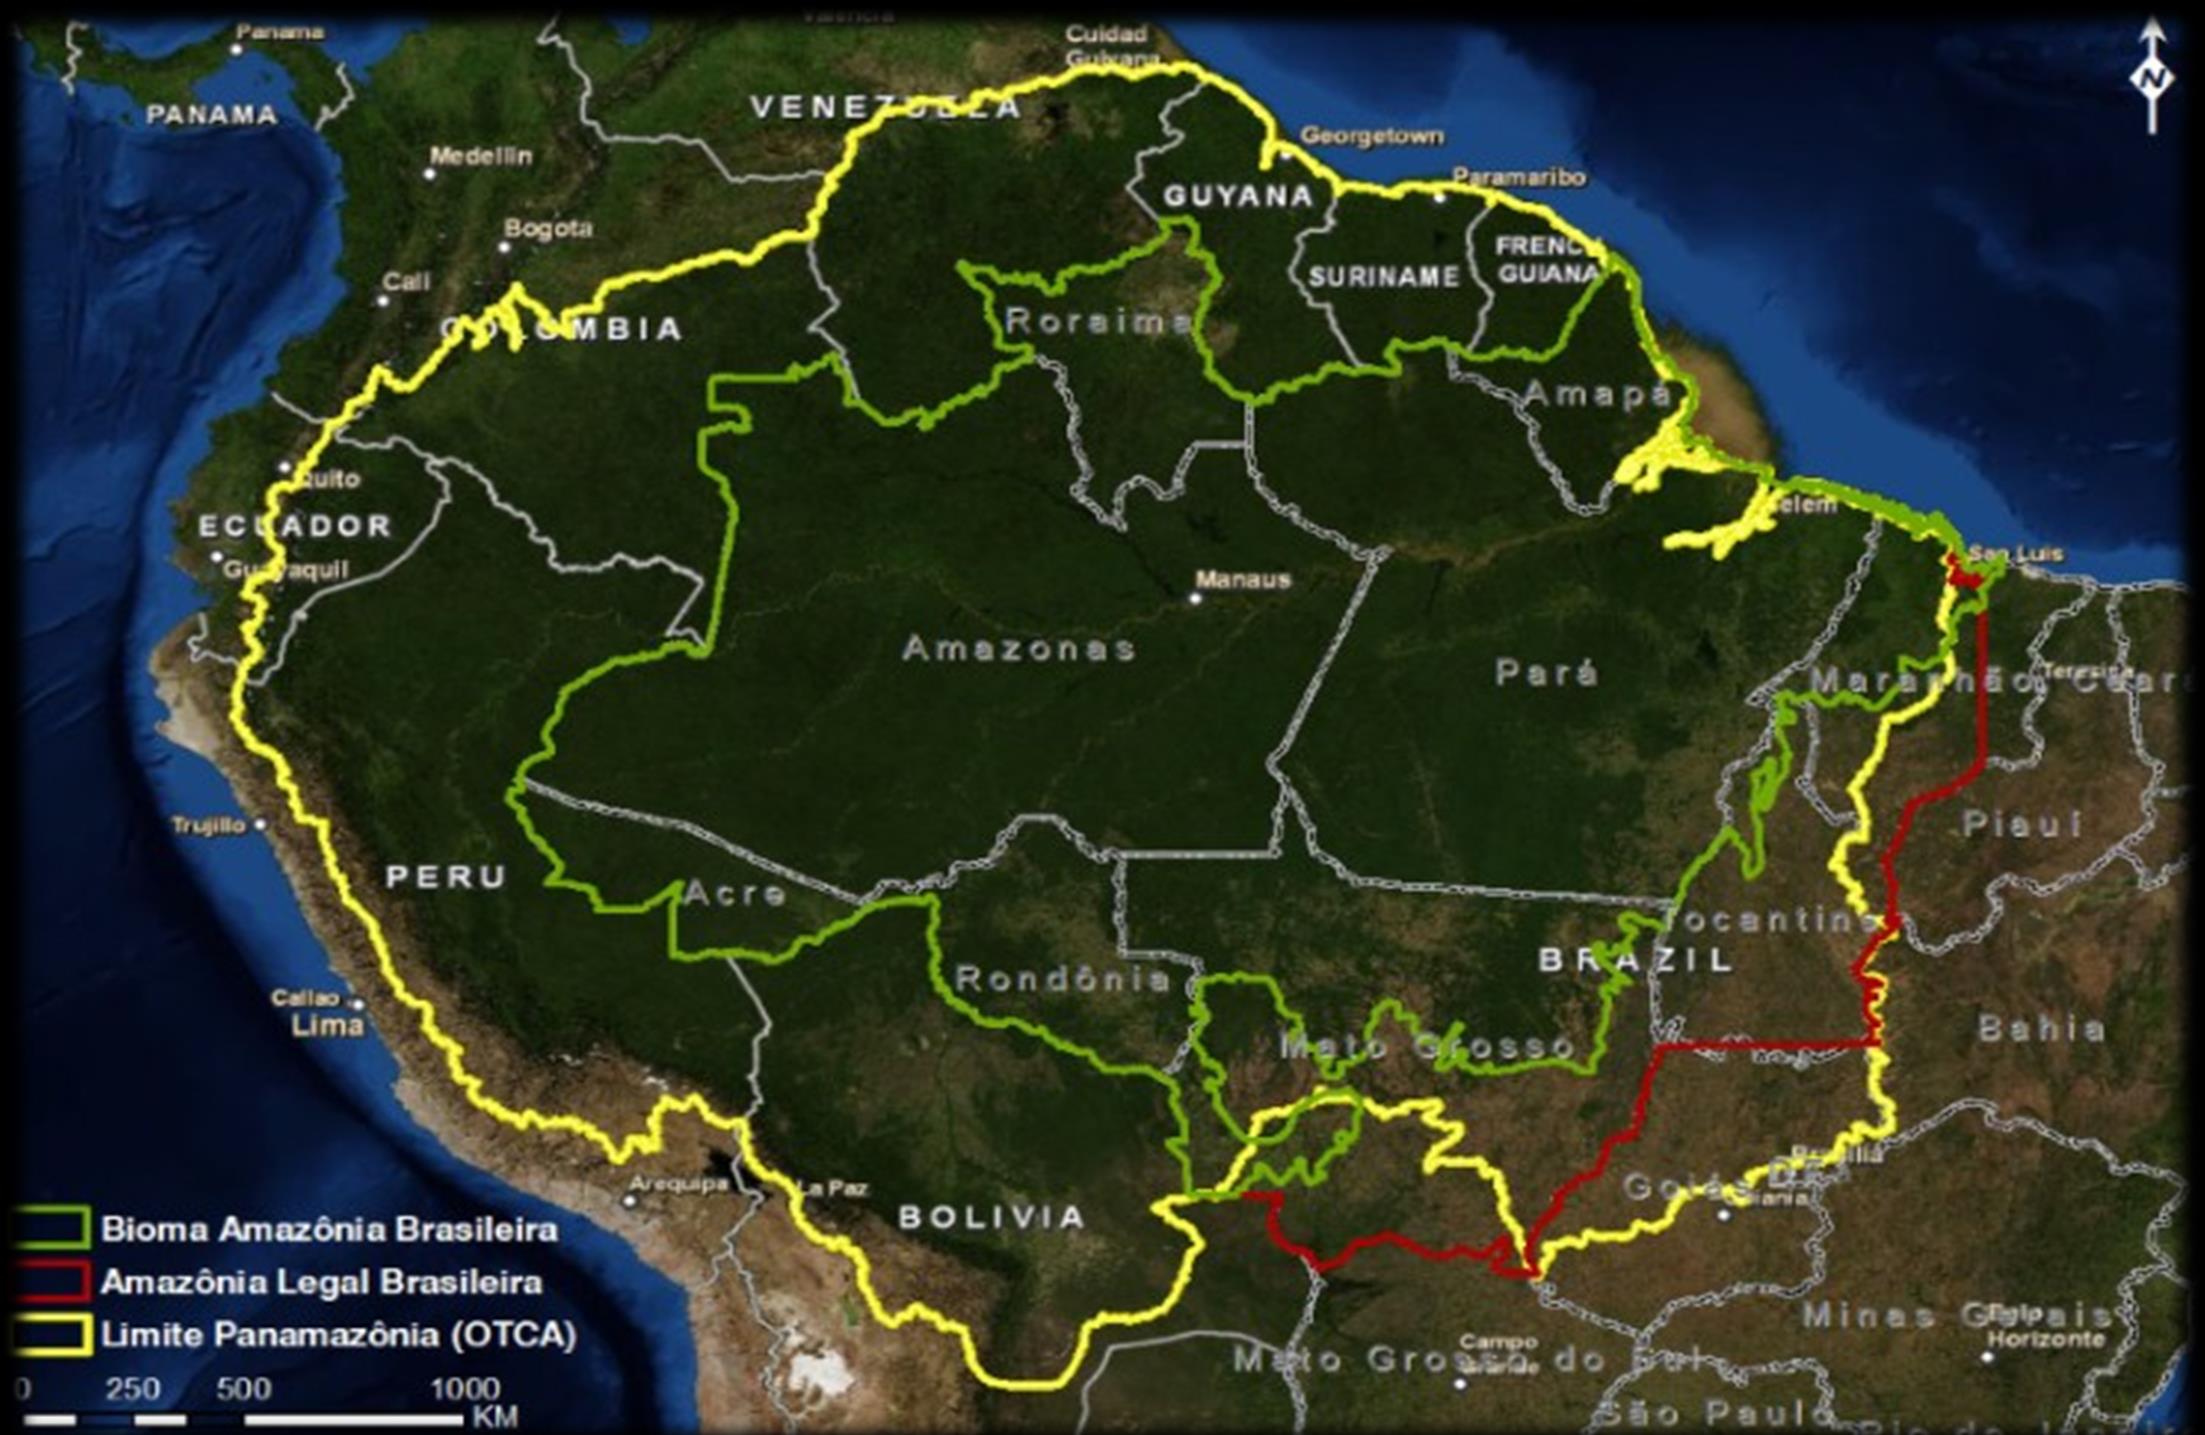 PAN AMAZÔNIA - 9 SOBERANIAS NACIONAIS - 7.000.000 km 2-1/20 SUP TER - 2/5 A.